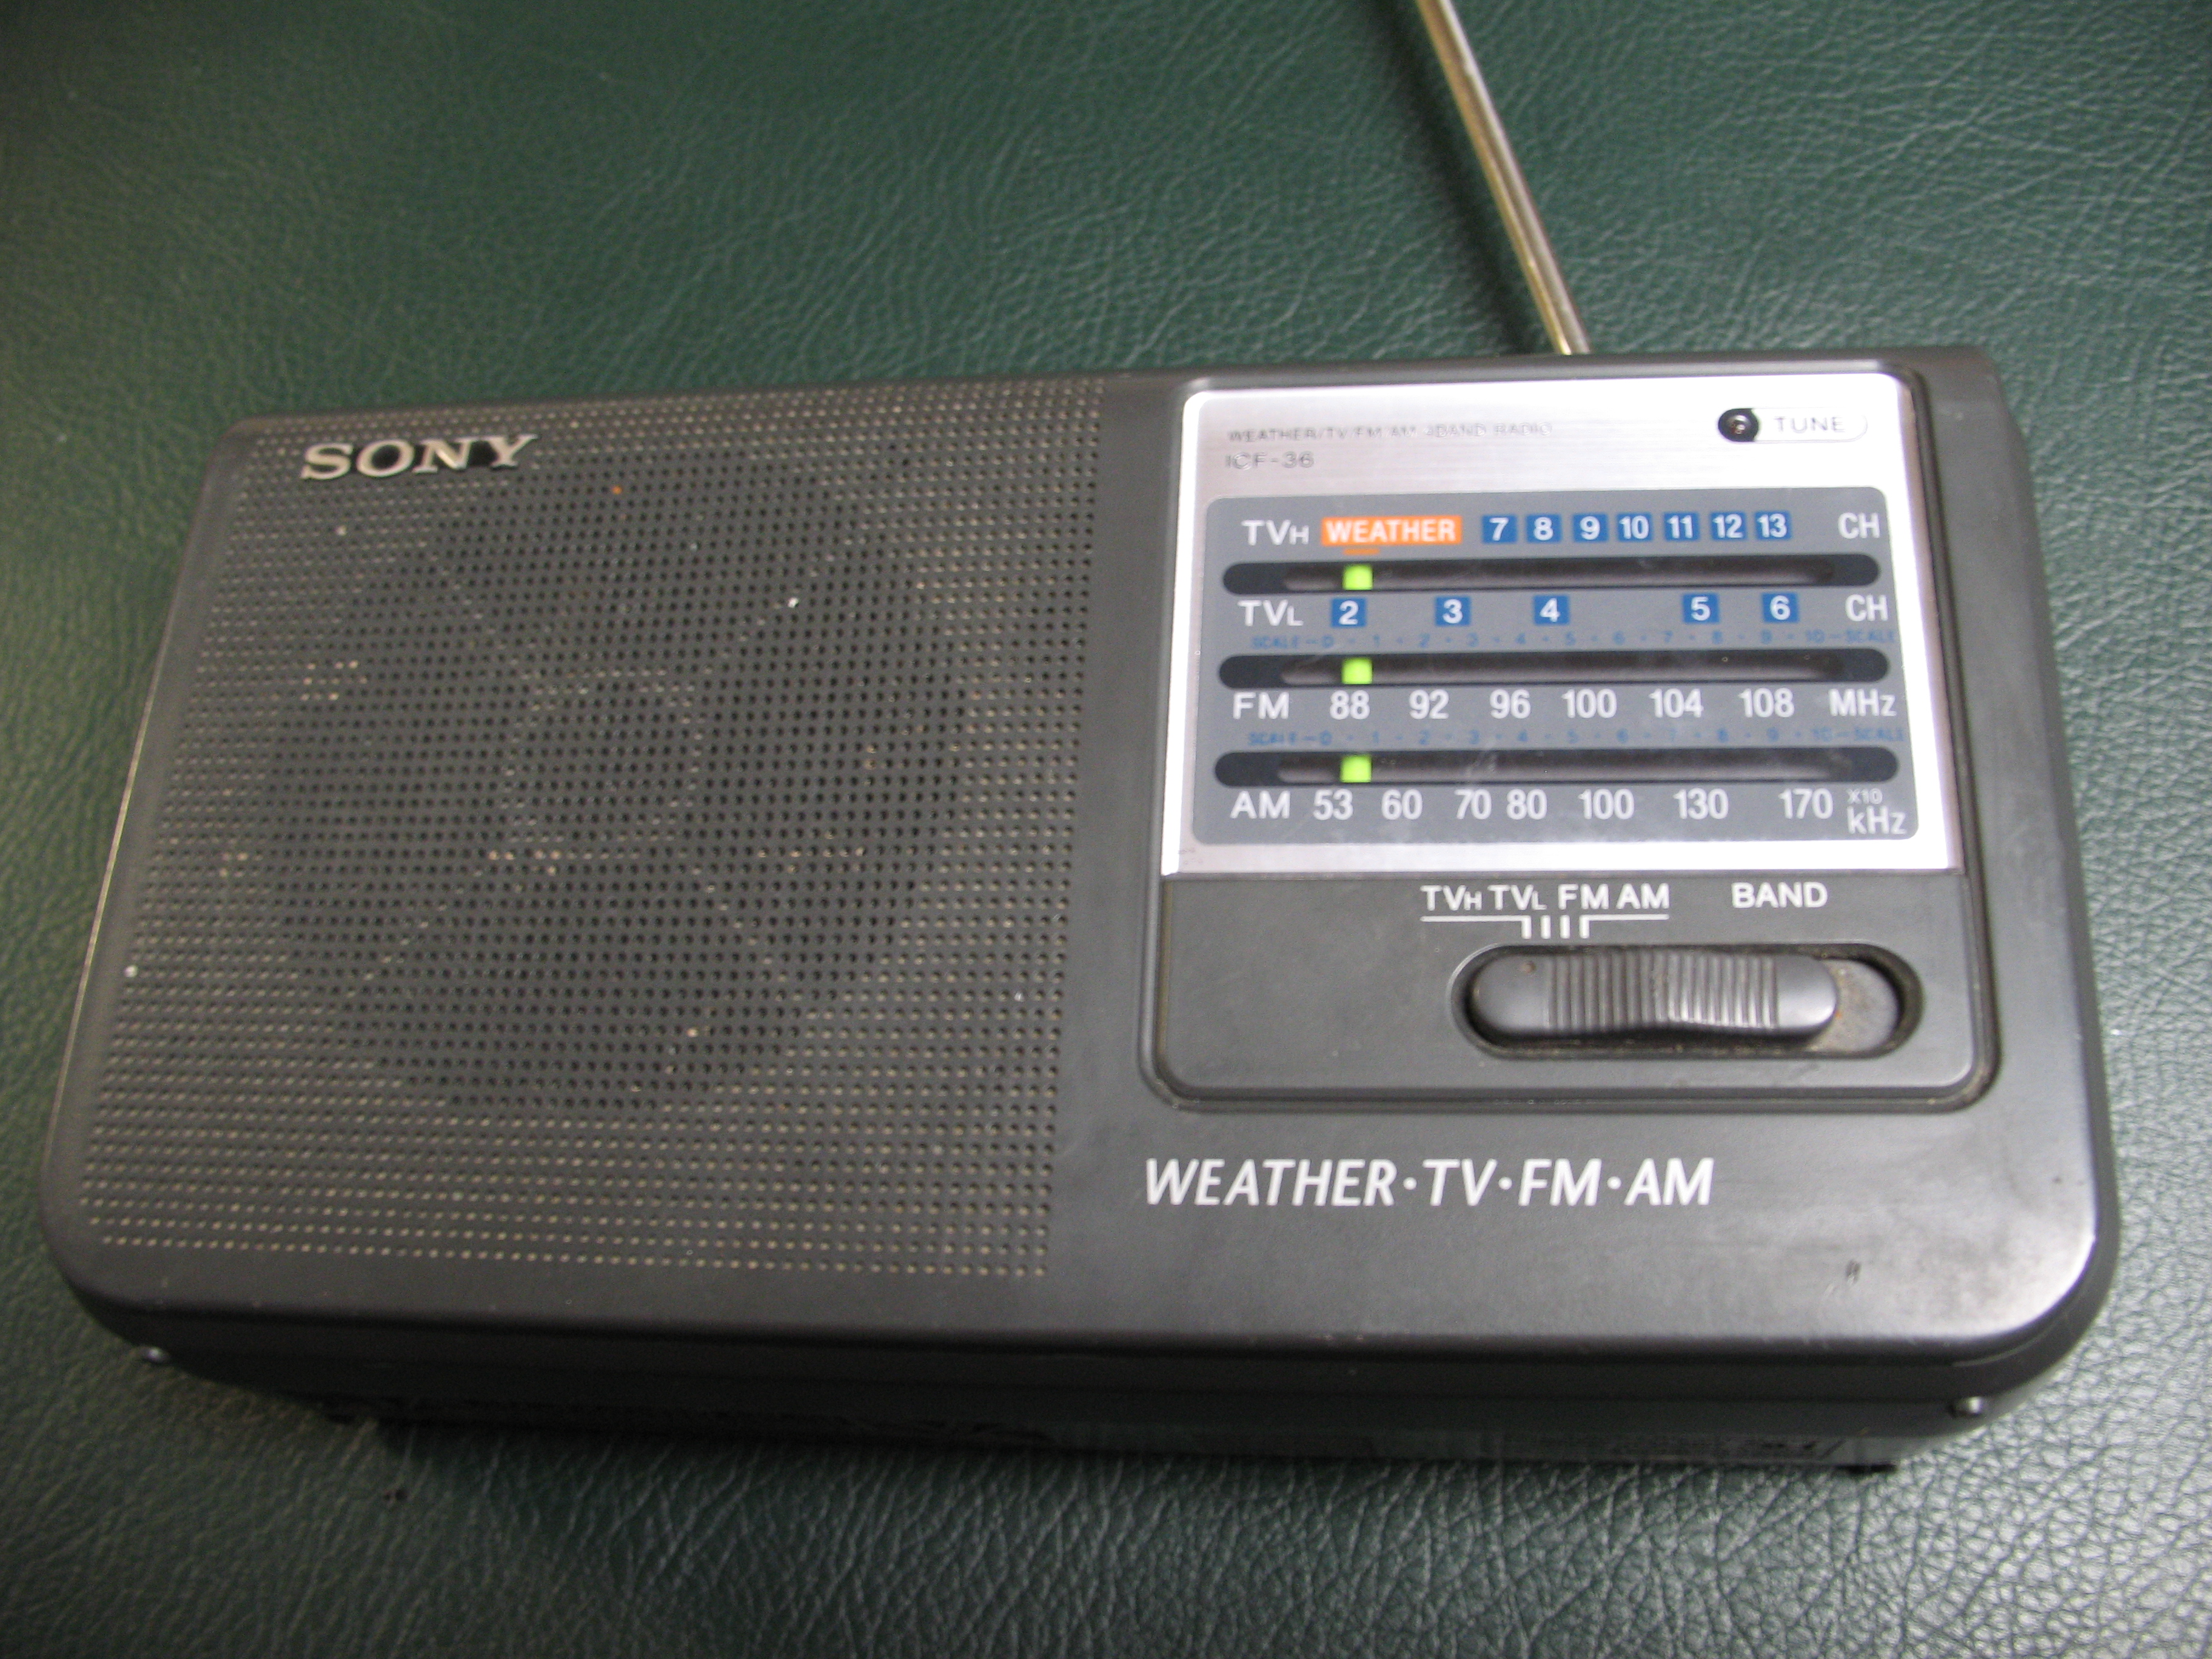 File:Sony ICF-36 portable radio - overview.JPG - Wikipedia